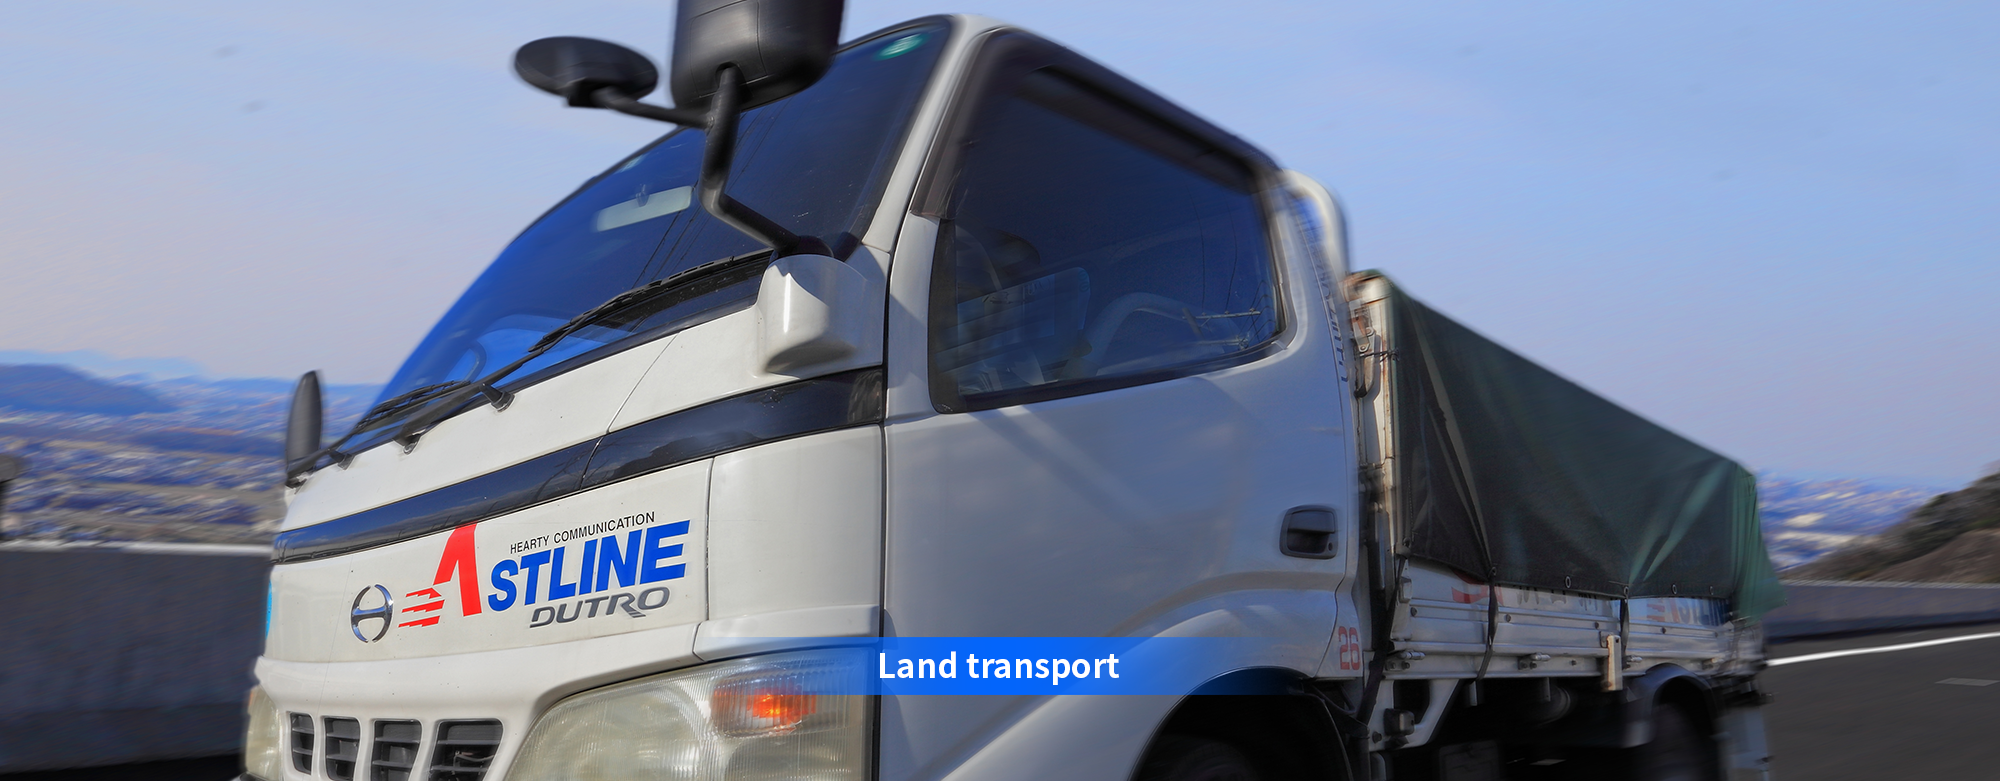 Land transport